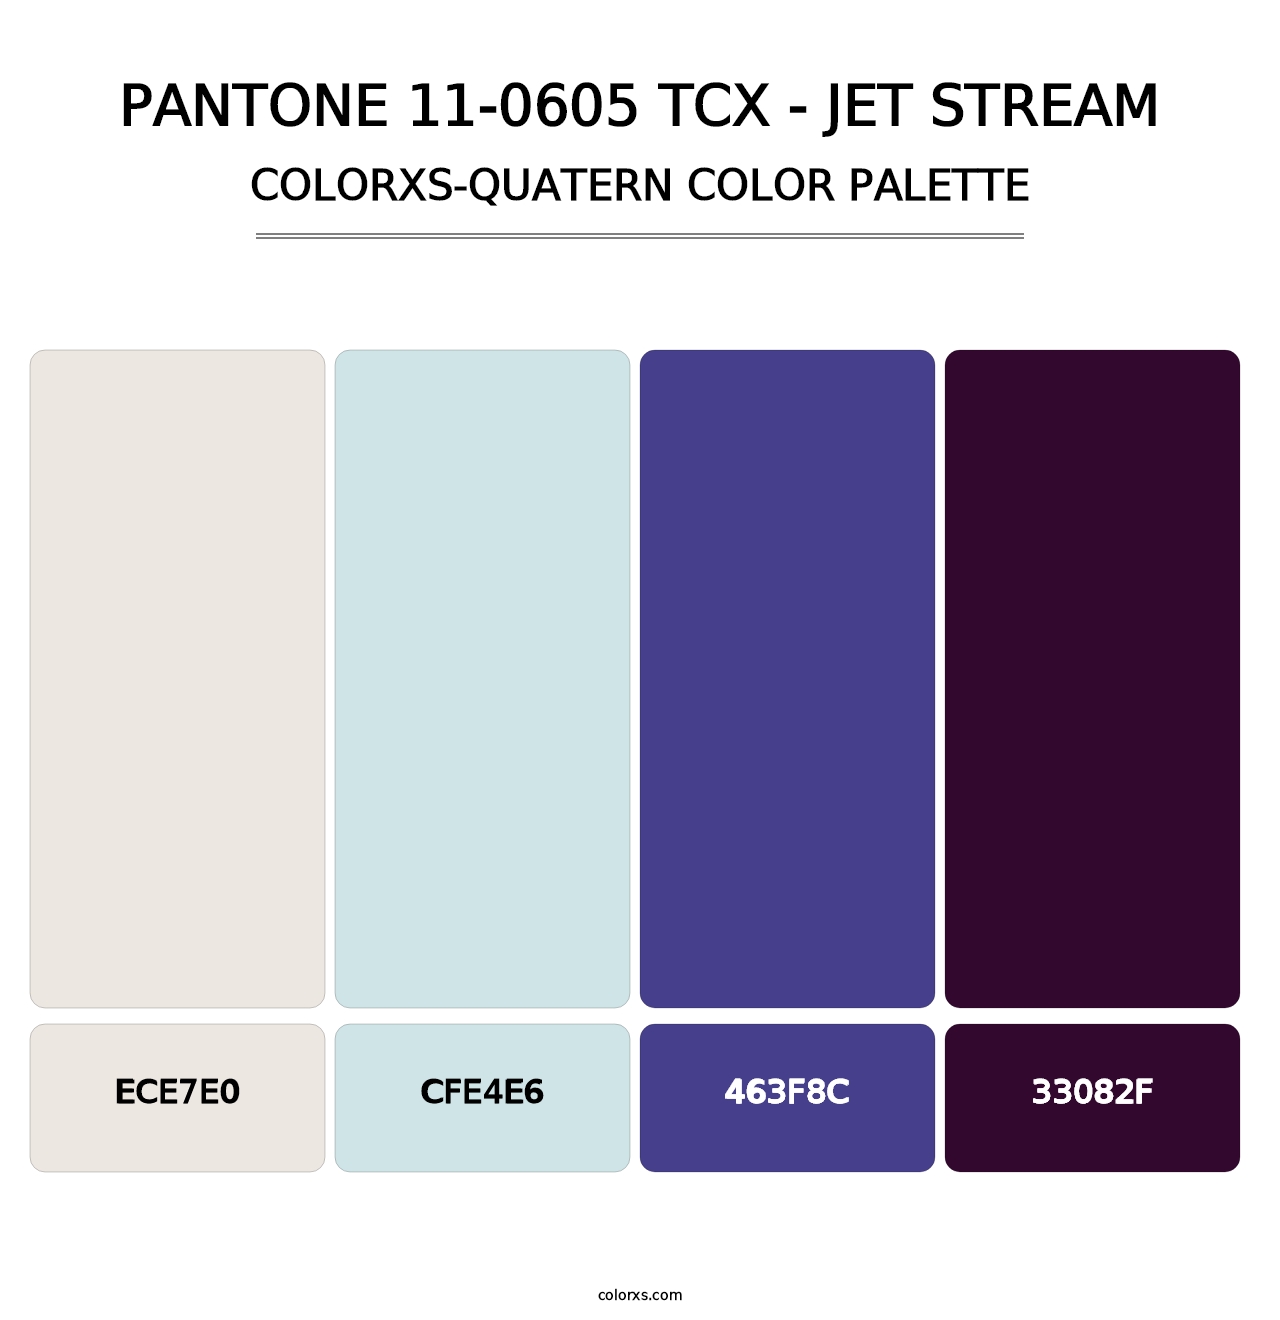 PANTONE 11-0605 TCX - Jet Stream - Colorxs Quatern Palette